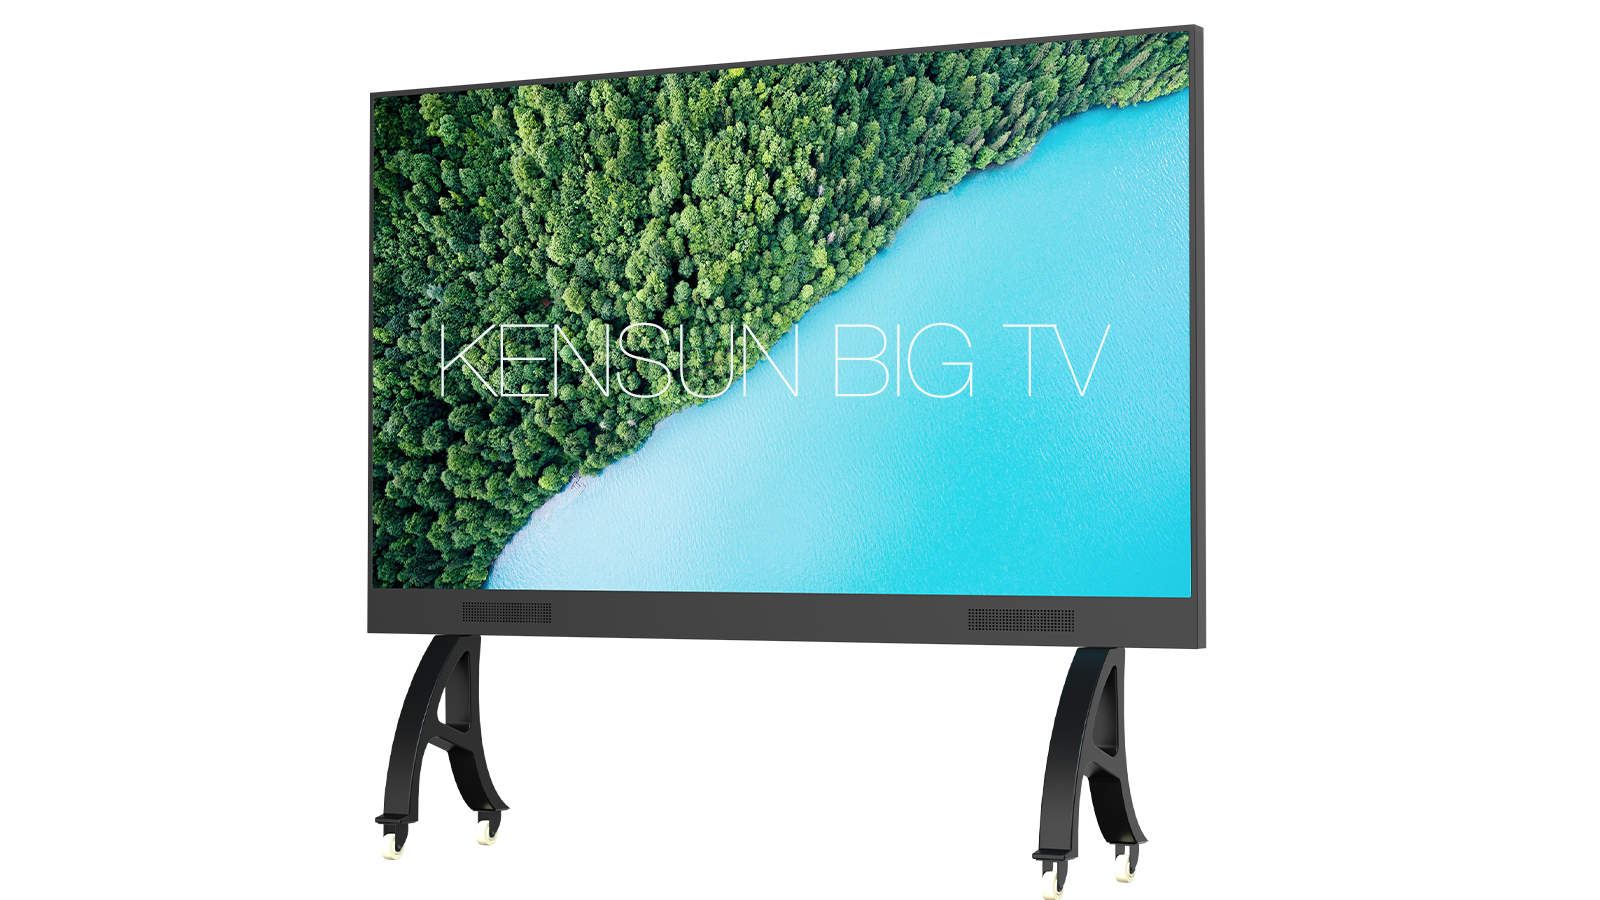 KENSUN BIG TV